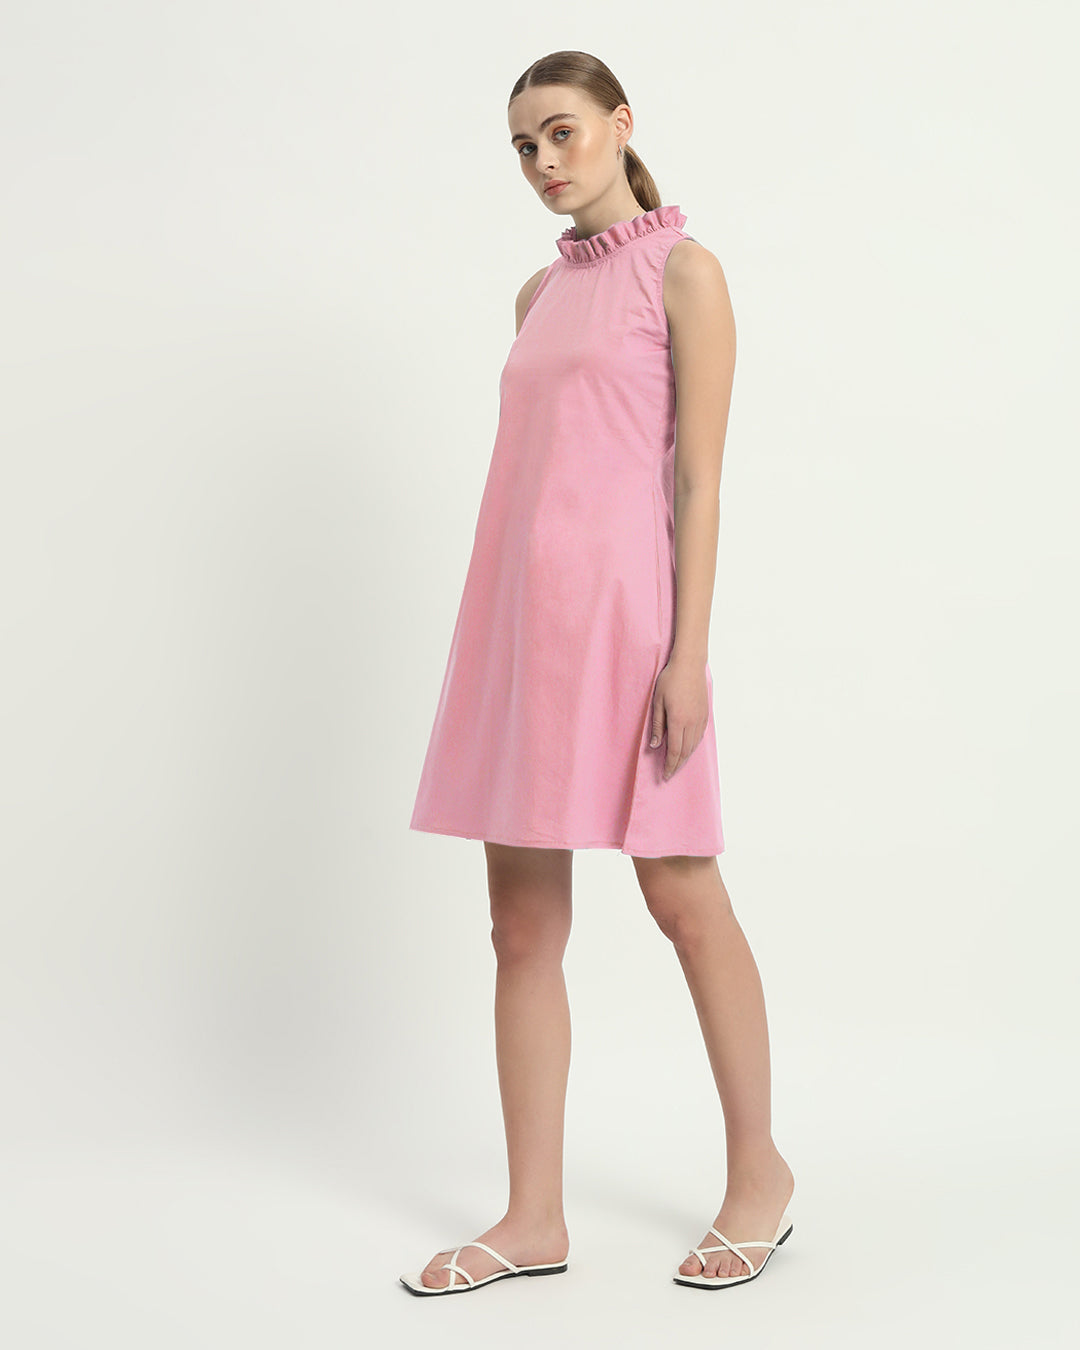 The Fondant Pink Angelica Cotton Dress